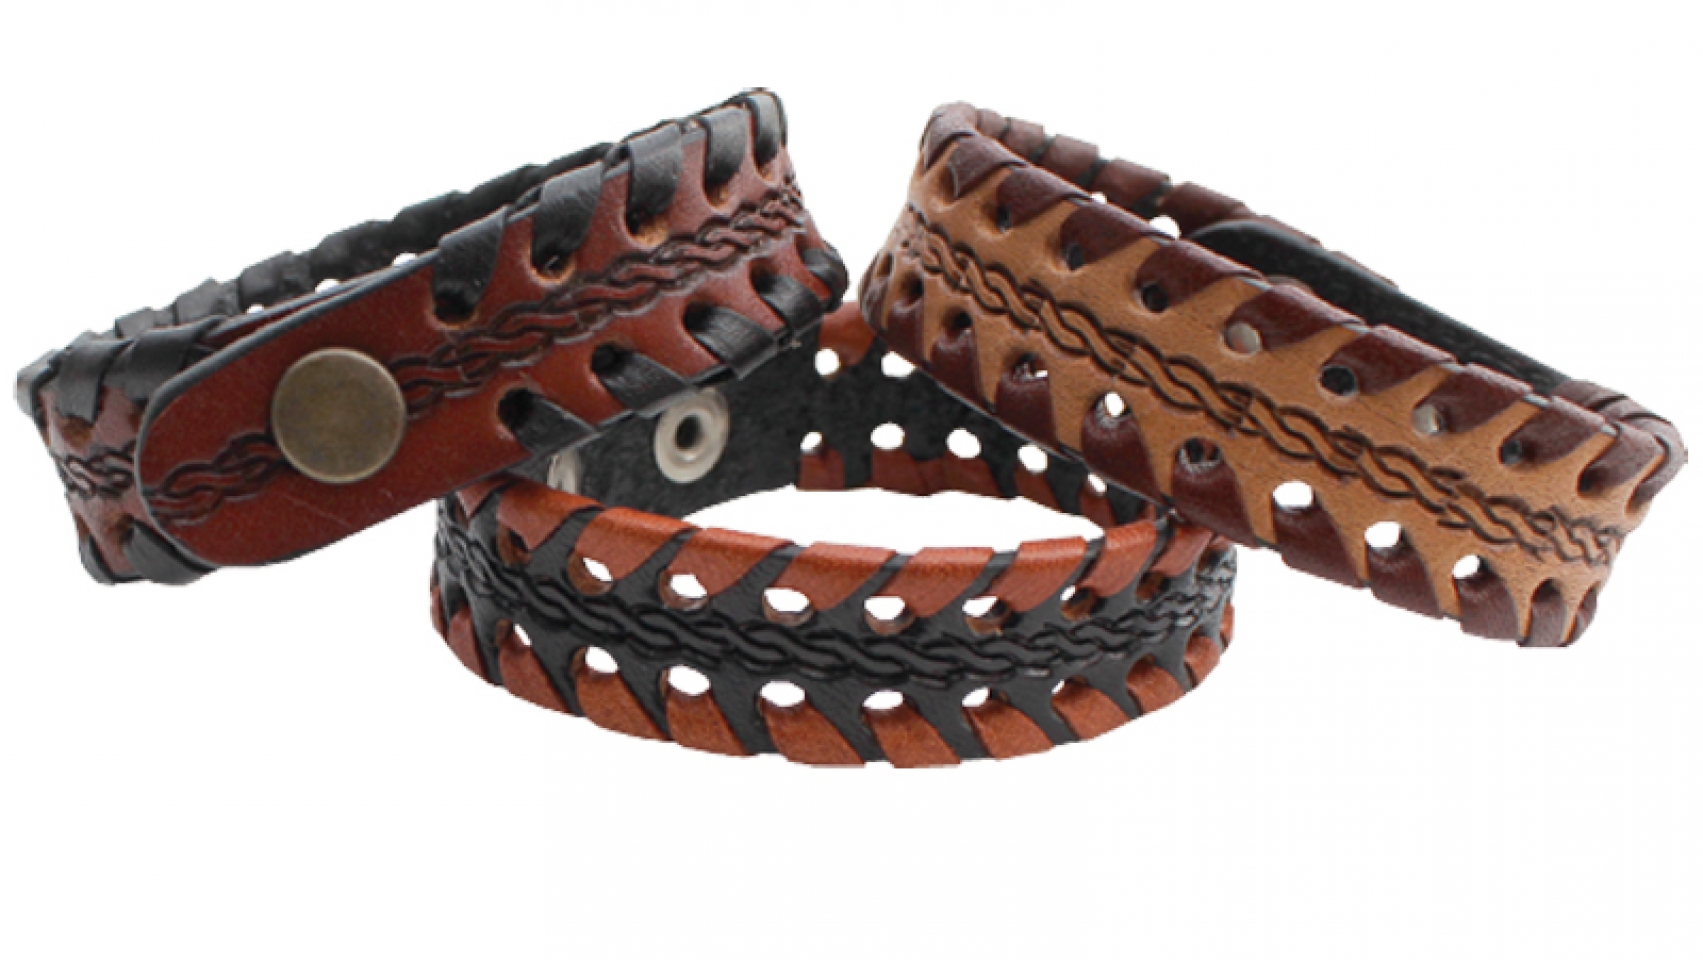 41 Unique Mens Leather Bracelets thatll Trend in 2021